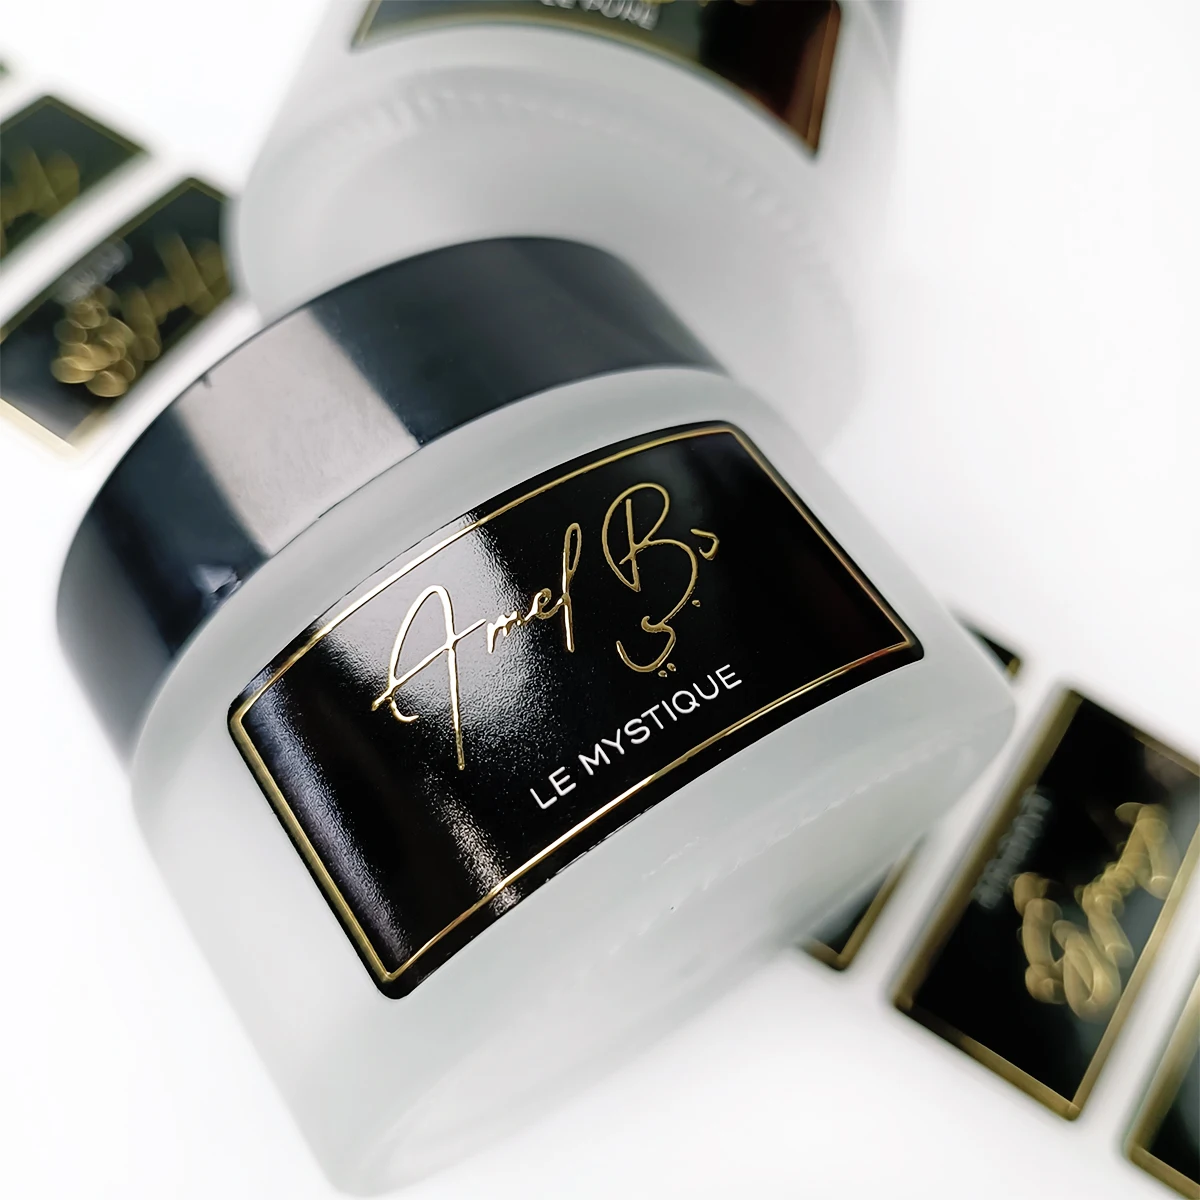 Custom Luxury Label Printing Waterproof Gold Foil Glass Jar Packaging for Cosmetic Bottle Roll Skin Care Vinyl Stickers